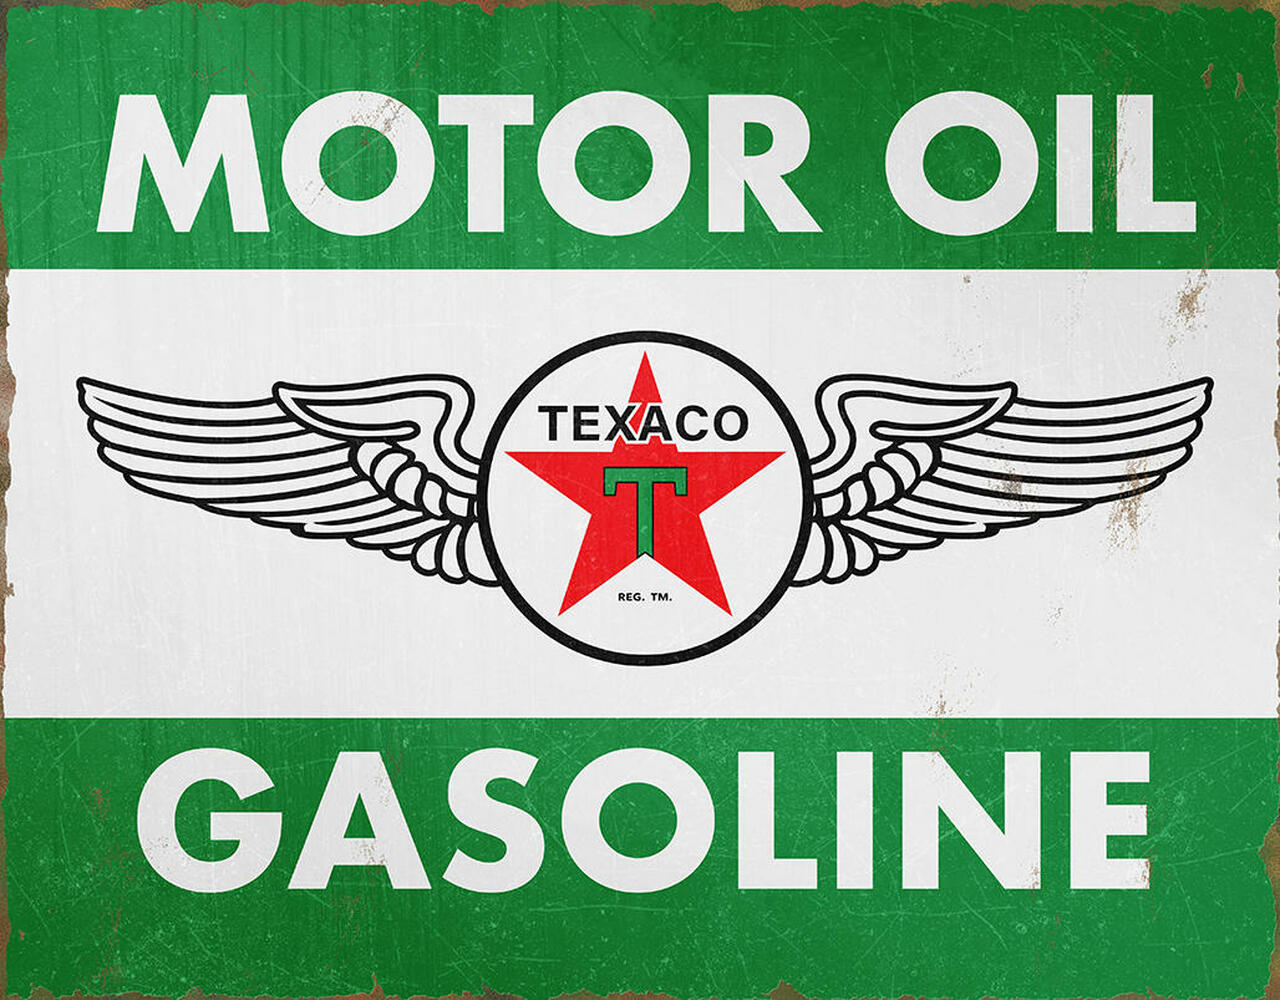 ALL METAL Oil Can - Texaco